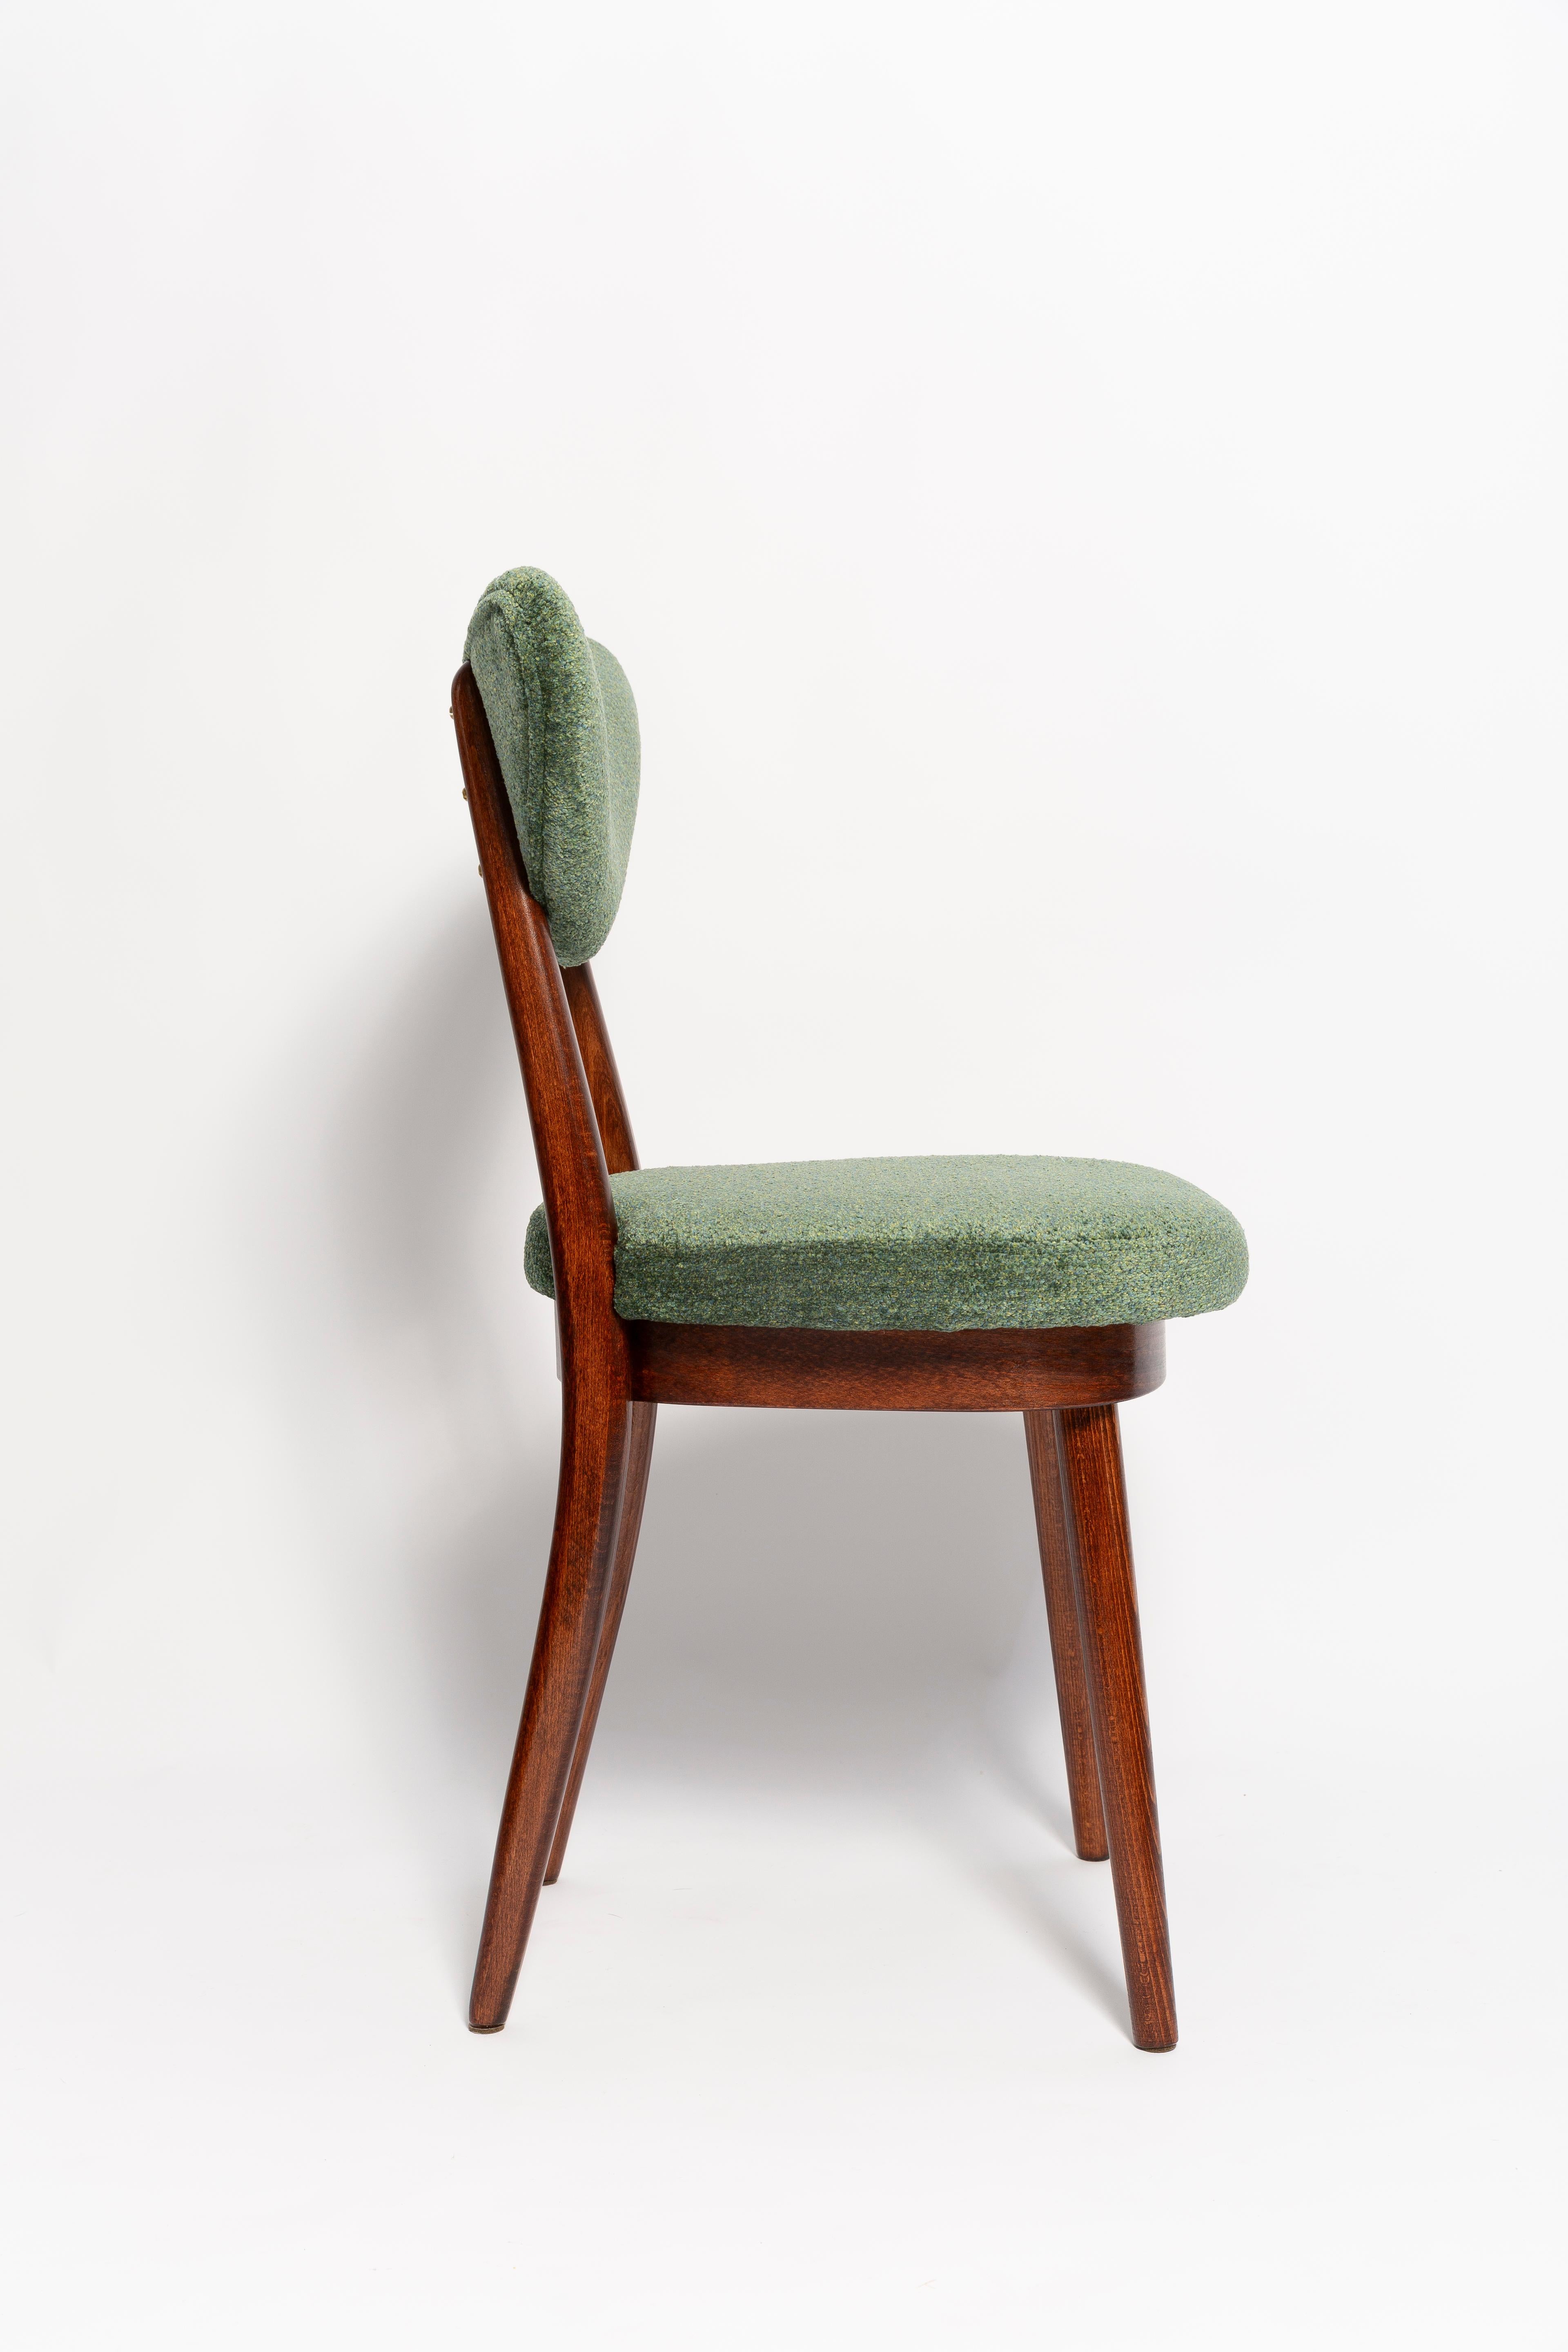 20th Century Mid Century Heart Chair and Stool, Green Velvet, Dark Wood, Europe 1960s For Sale